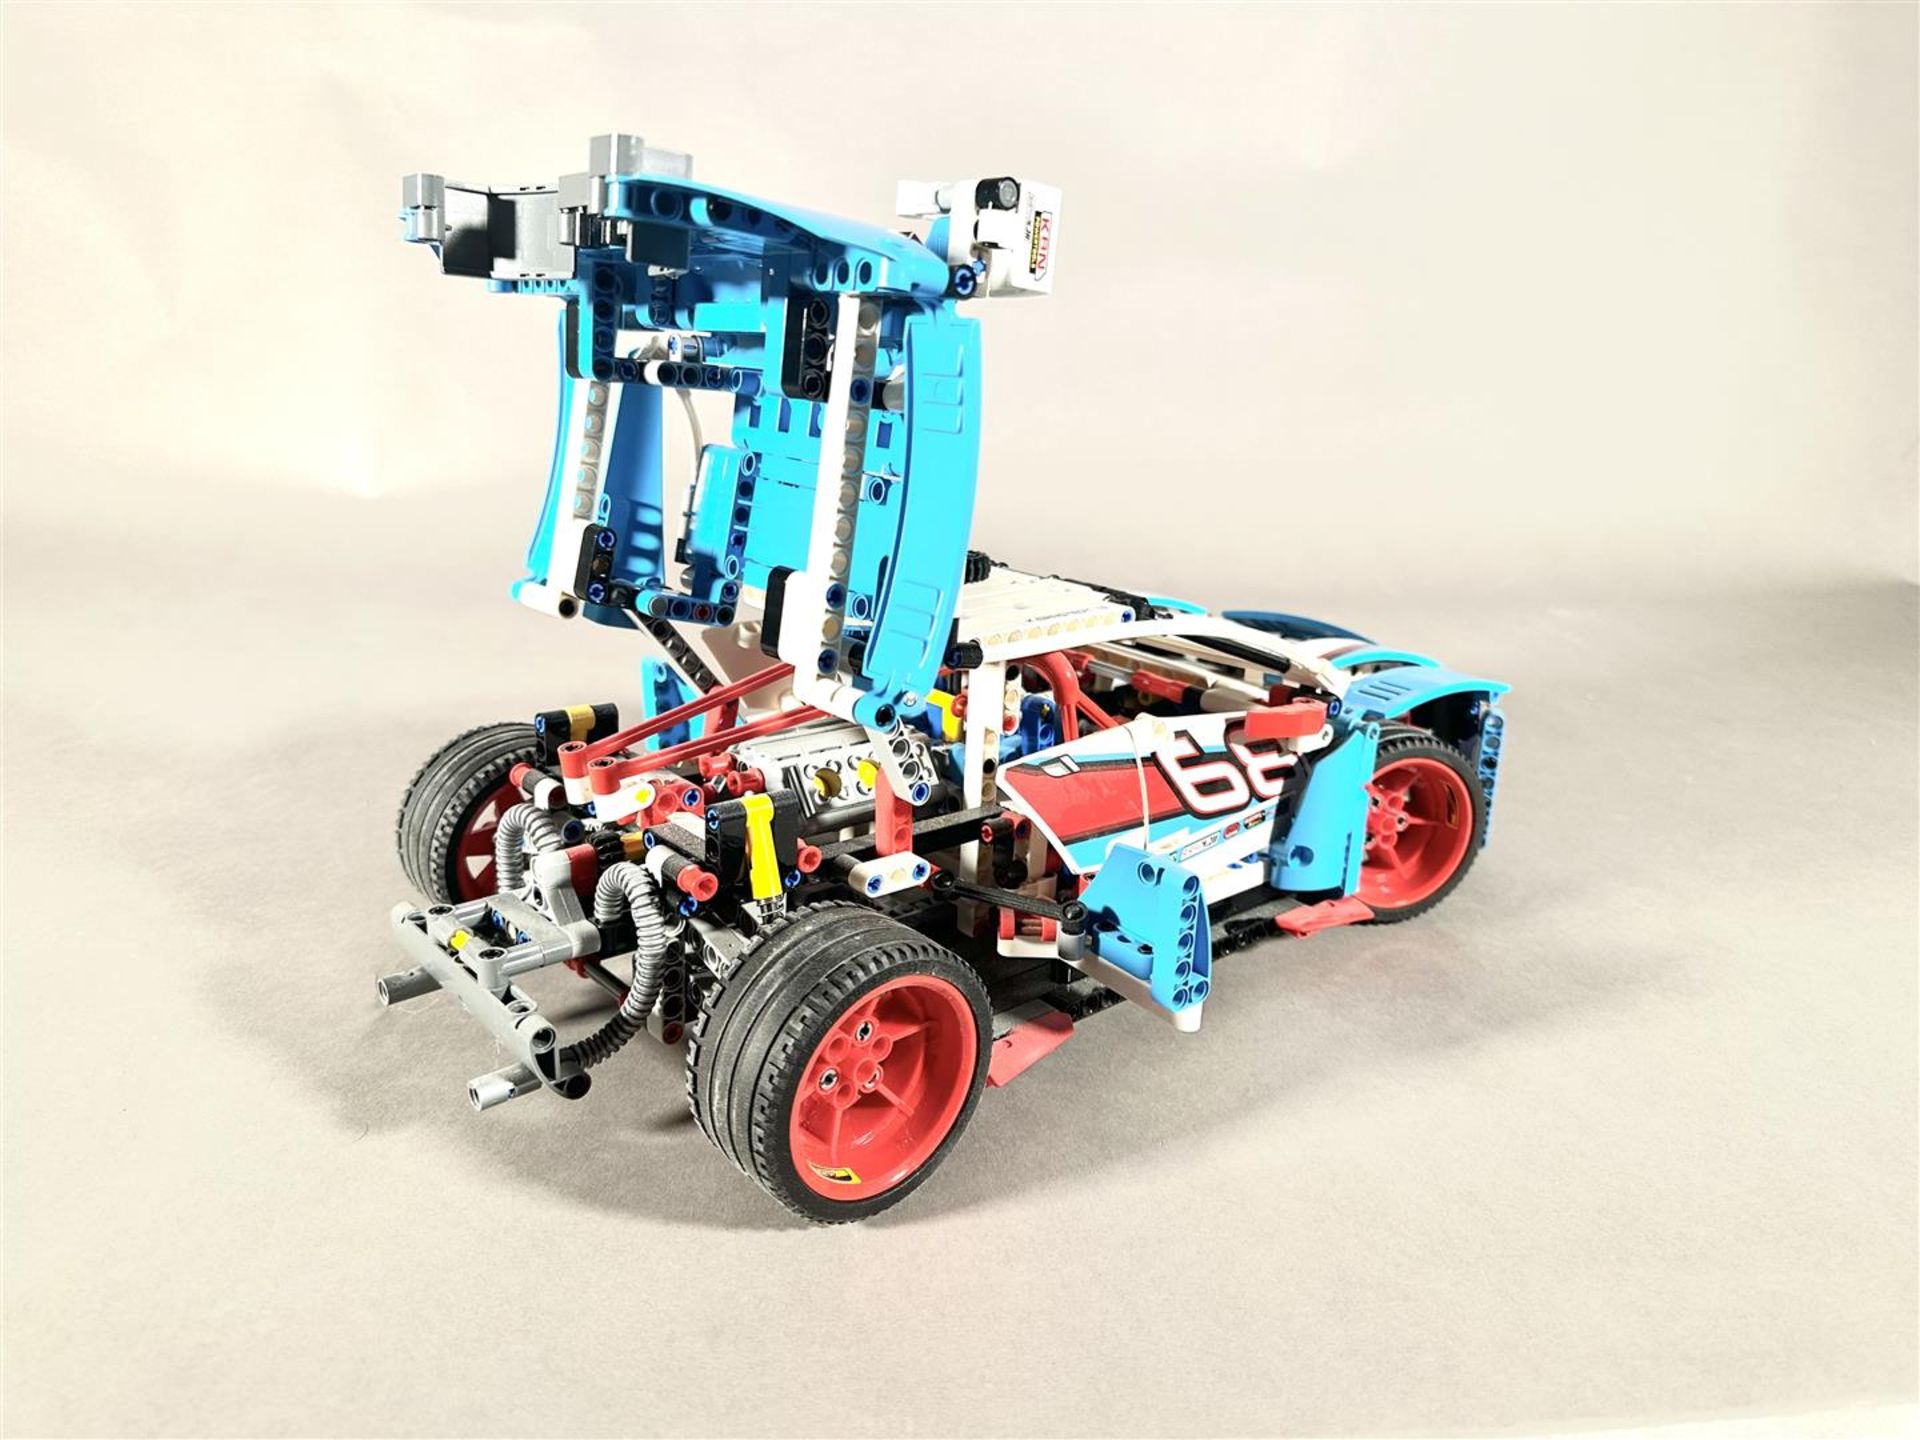 Lego - Technic - 42077 - Car rally car - 2000-present - Netherlands - Image 5 of 6